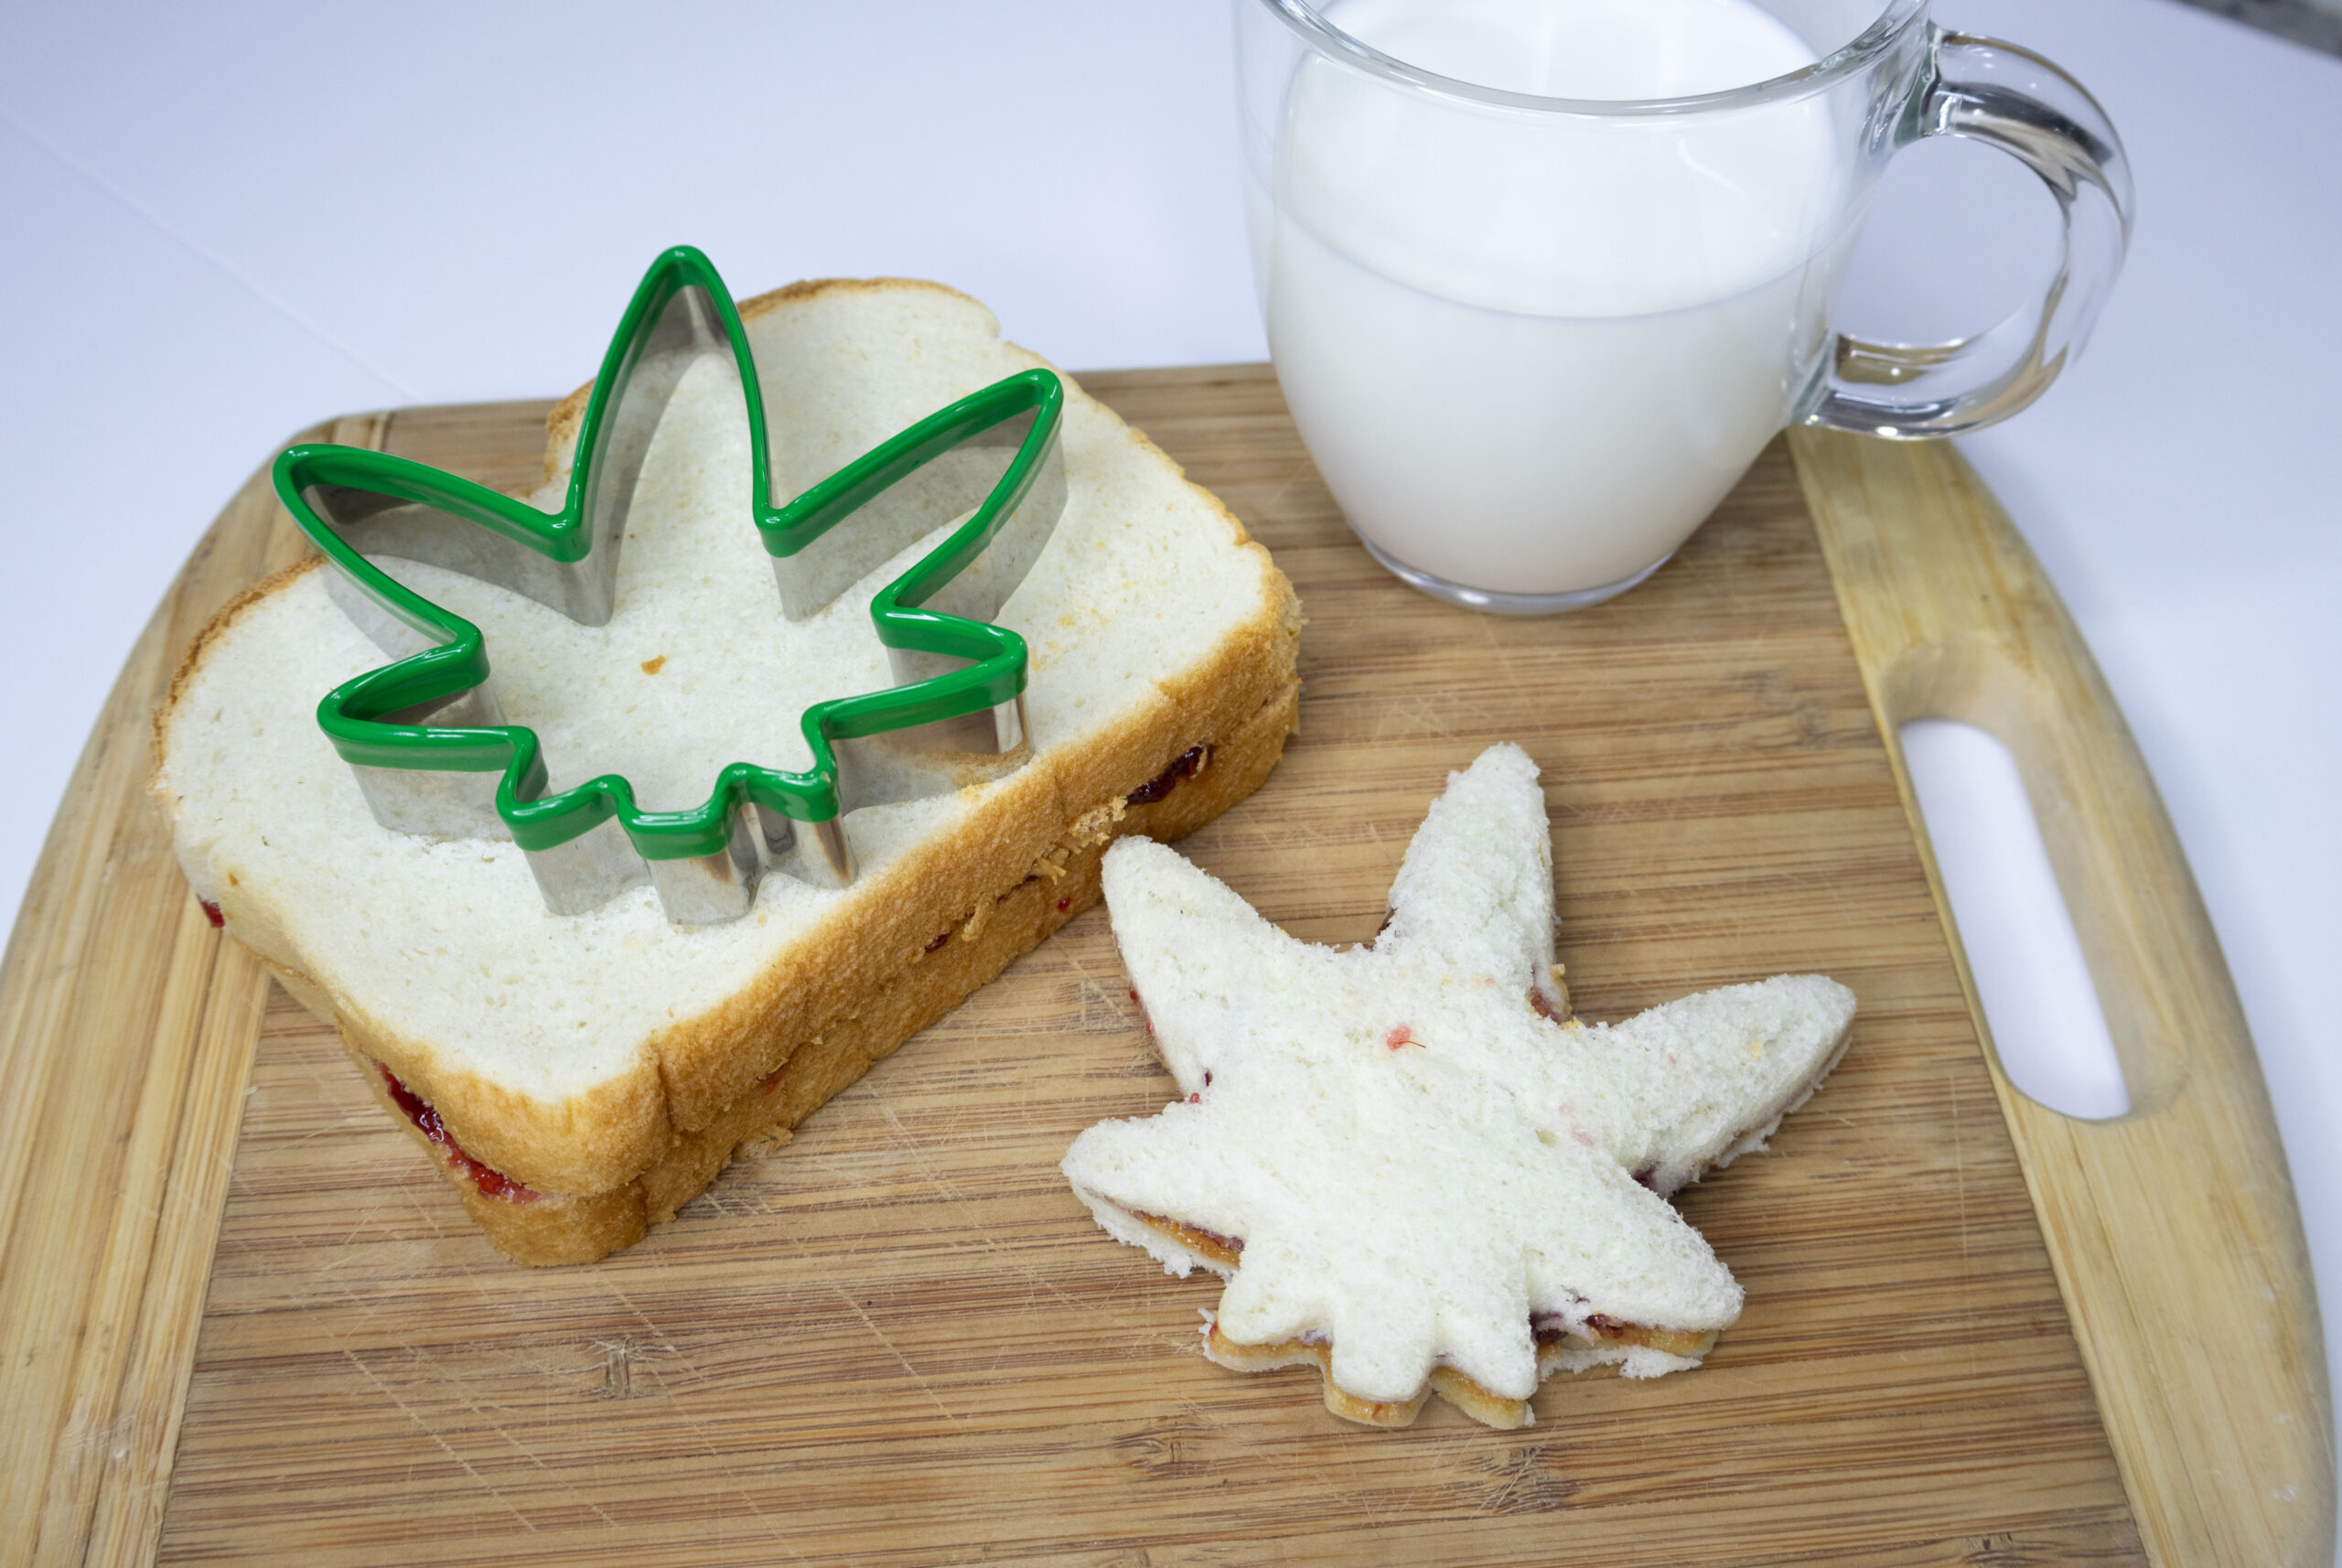 Buy 3pc Pot Leaf Cookie Cutter Set Online